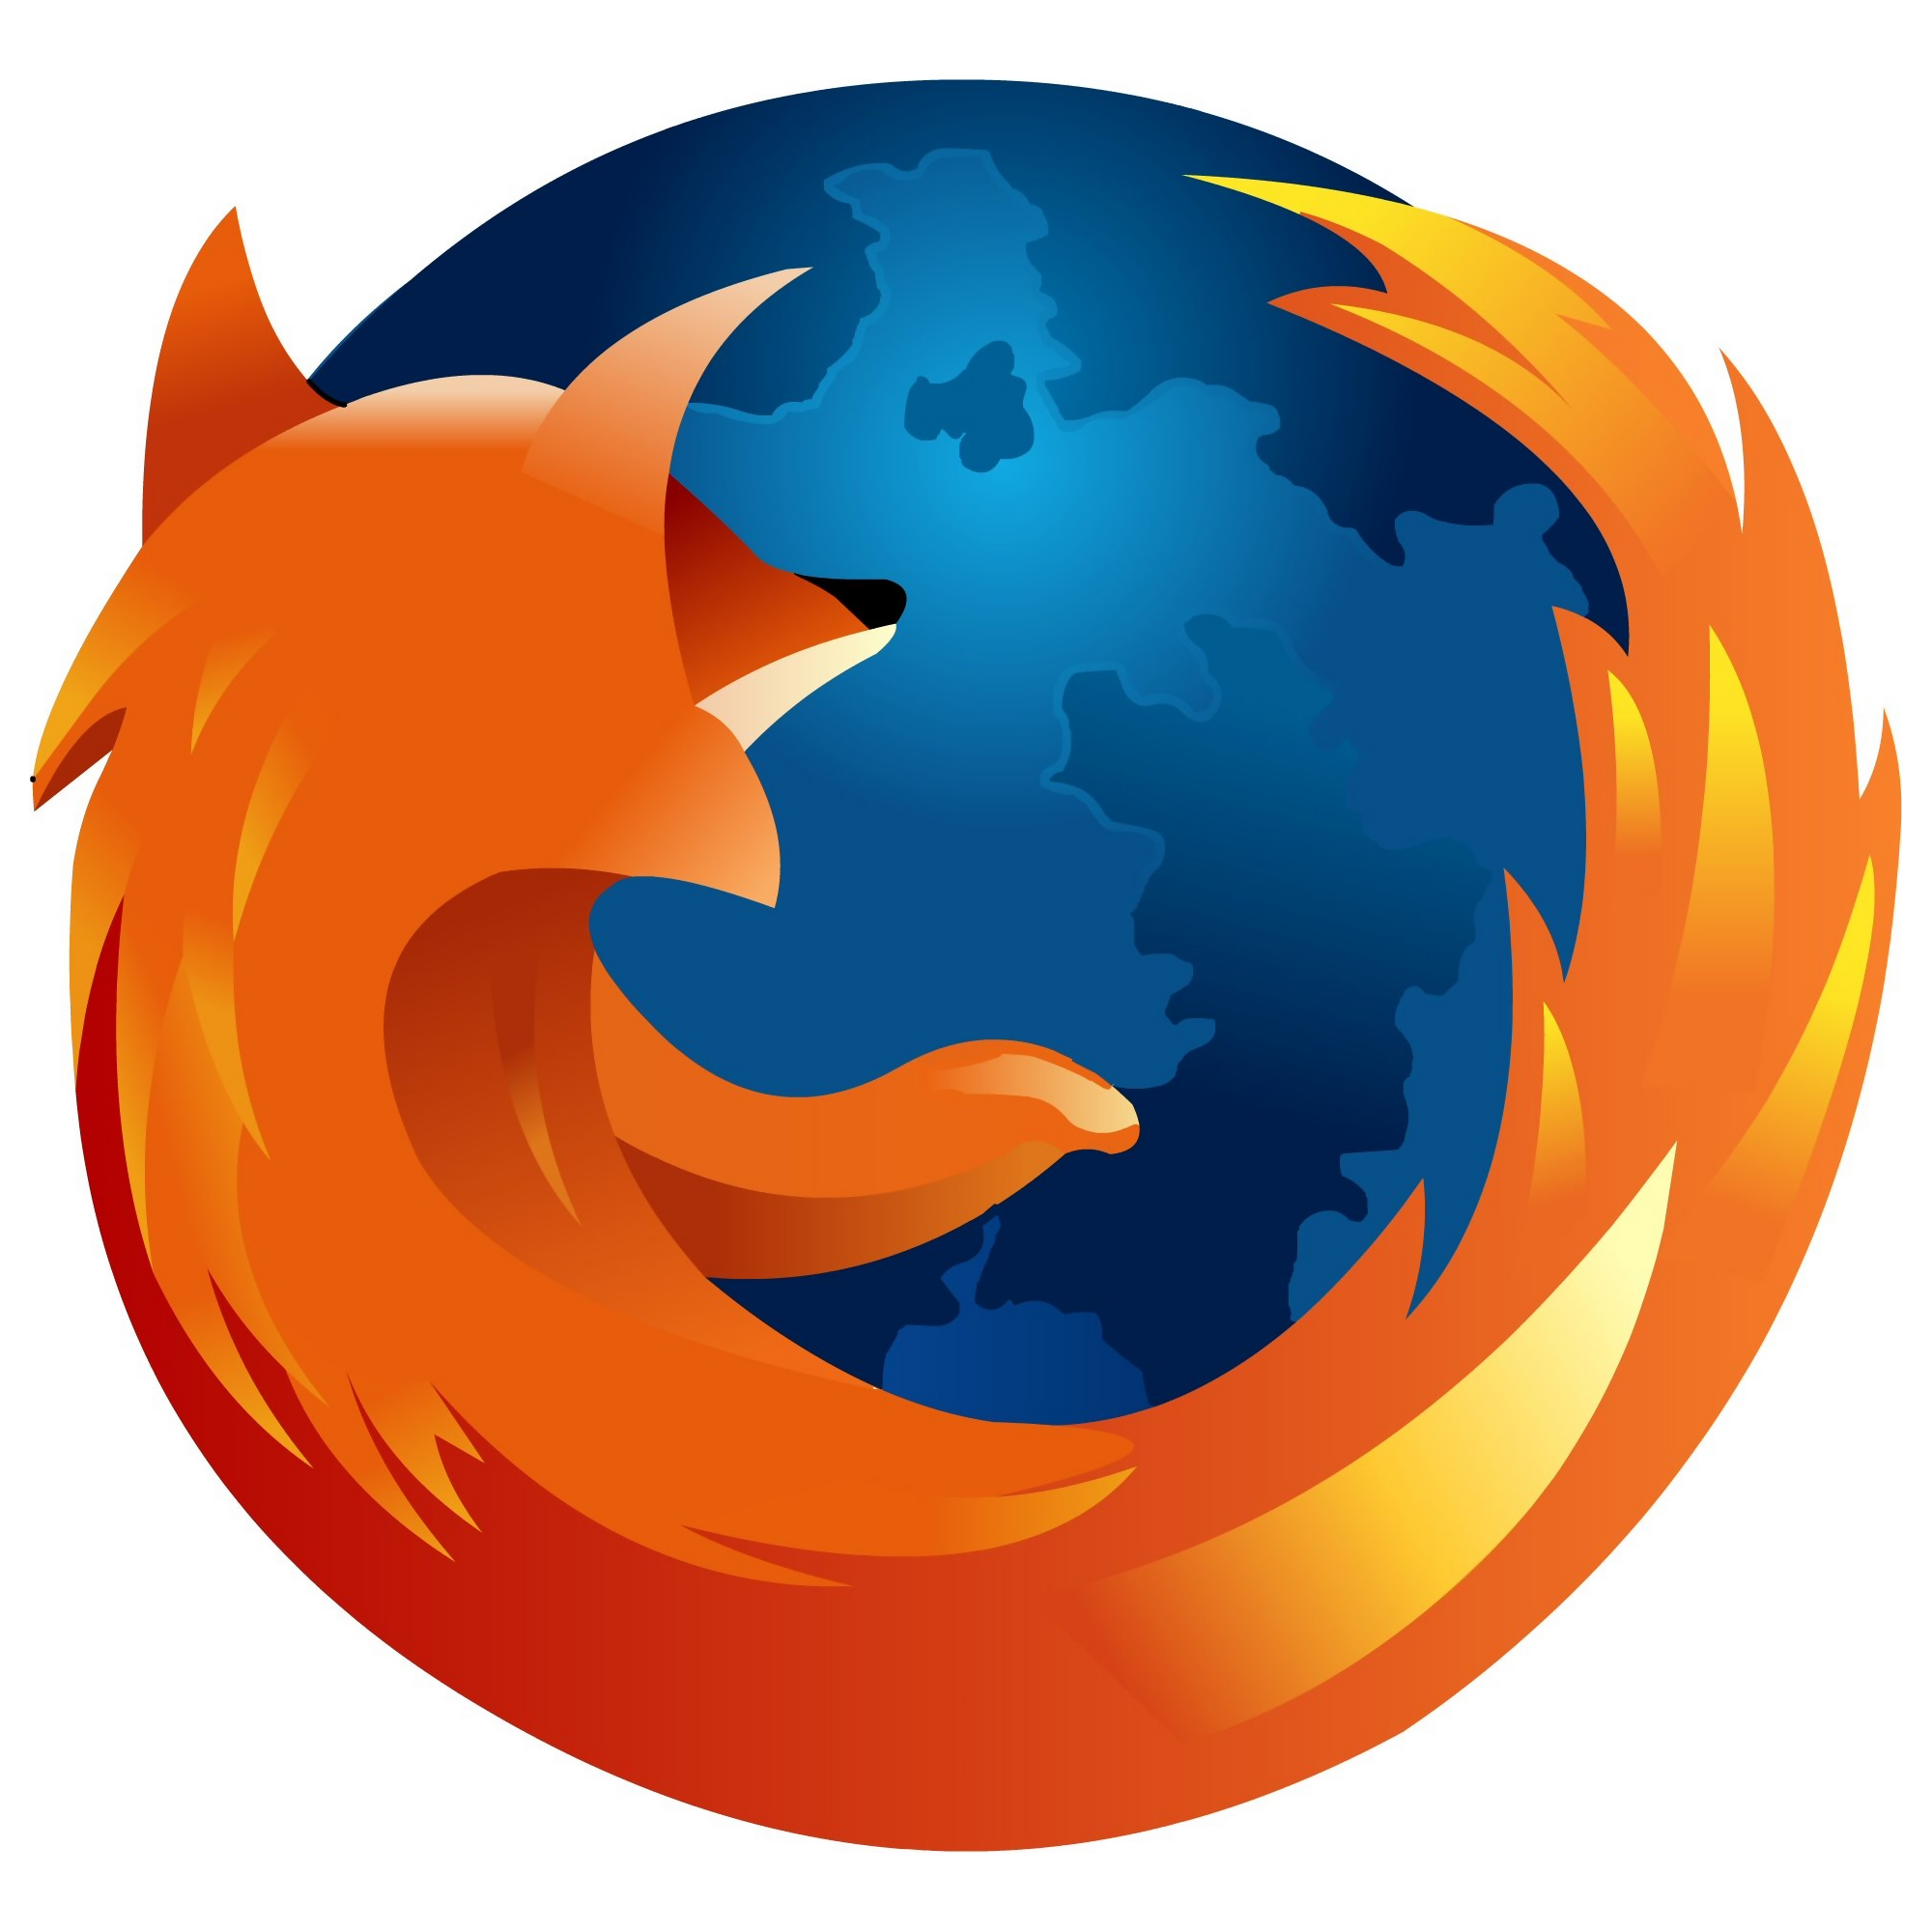 128x128 px, Naruto Firefox Ic